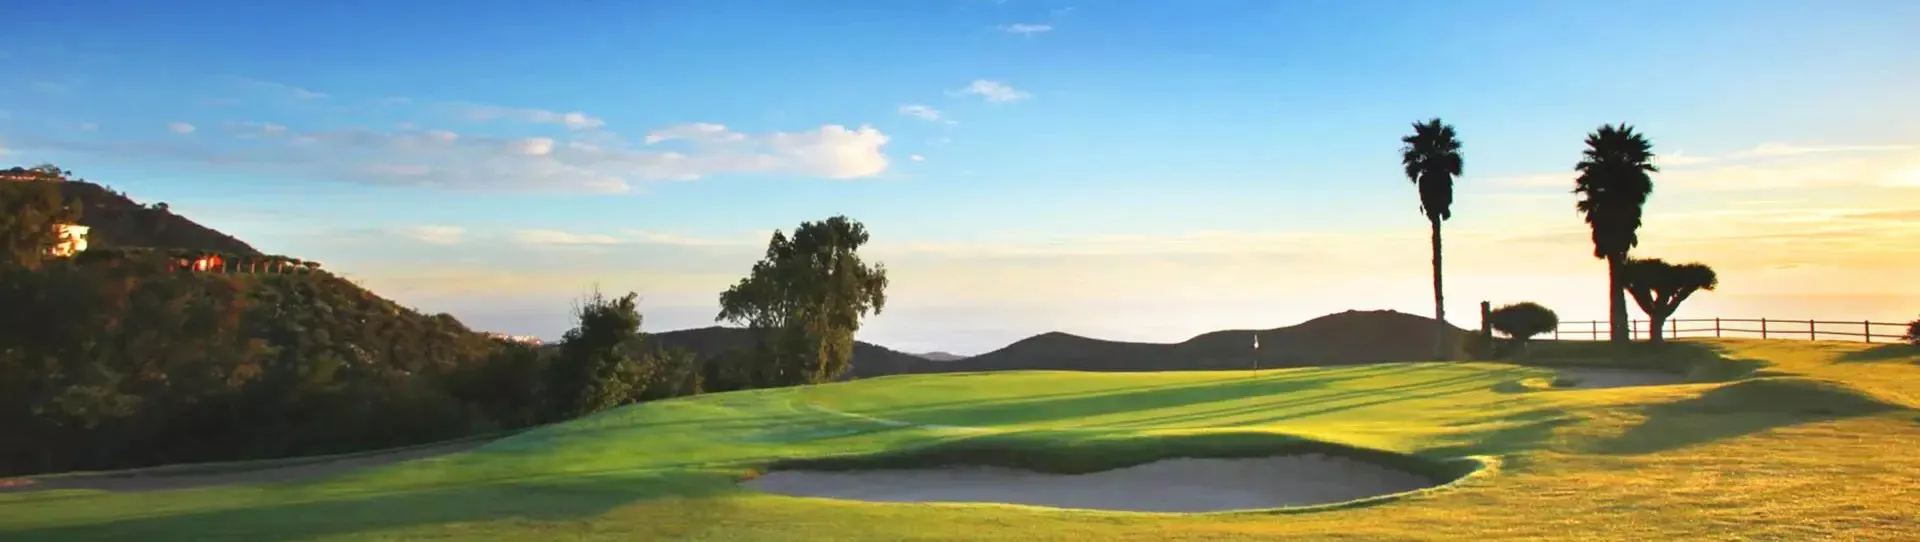 Spain golf courses - Real Club de Golf Las Palmas - Photo 1